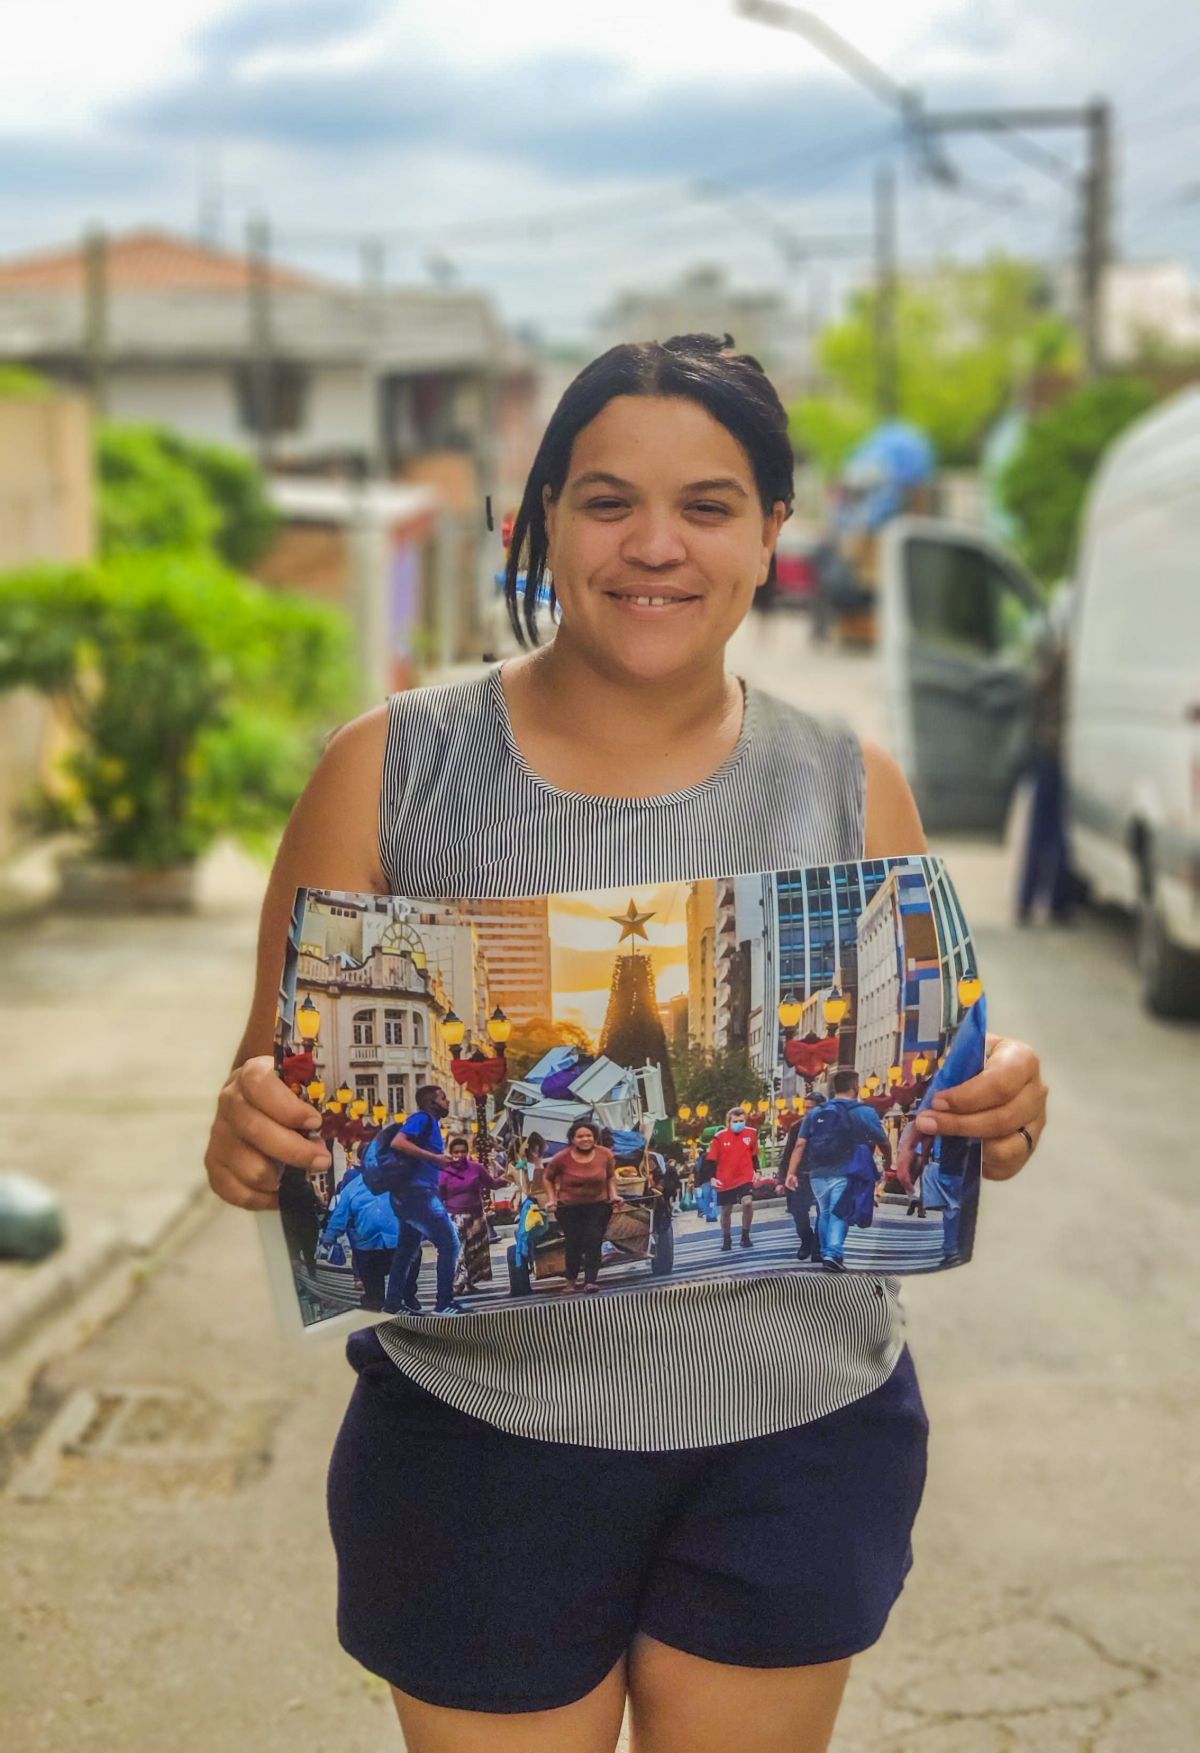 Sorriso de catadora de papel leva fotógrafo a jornada emocionante em Curitiba